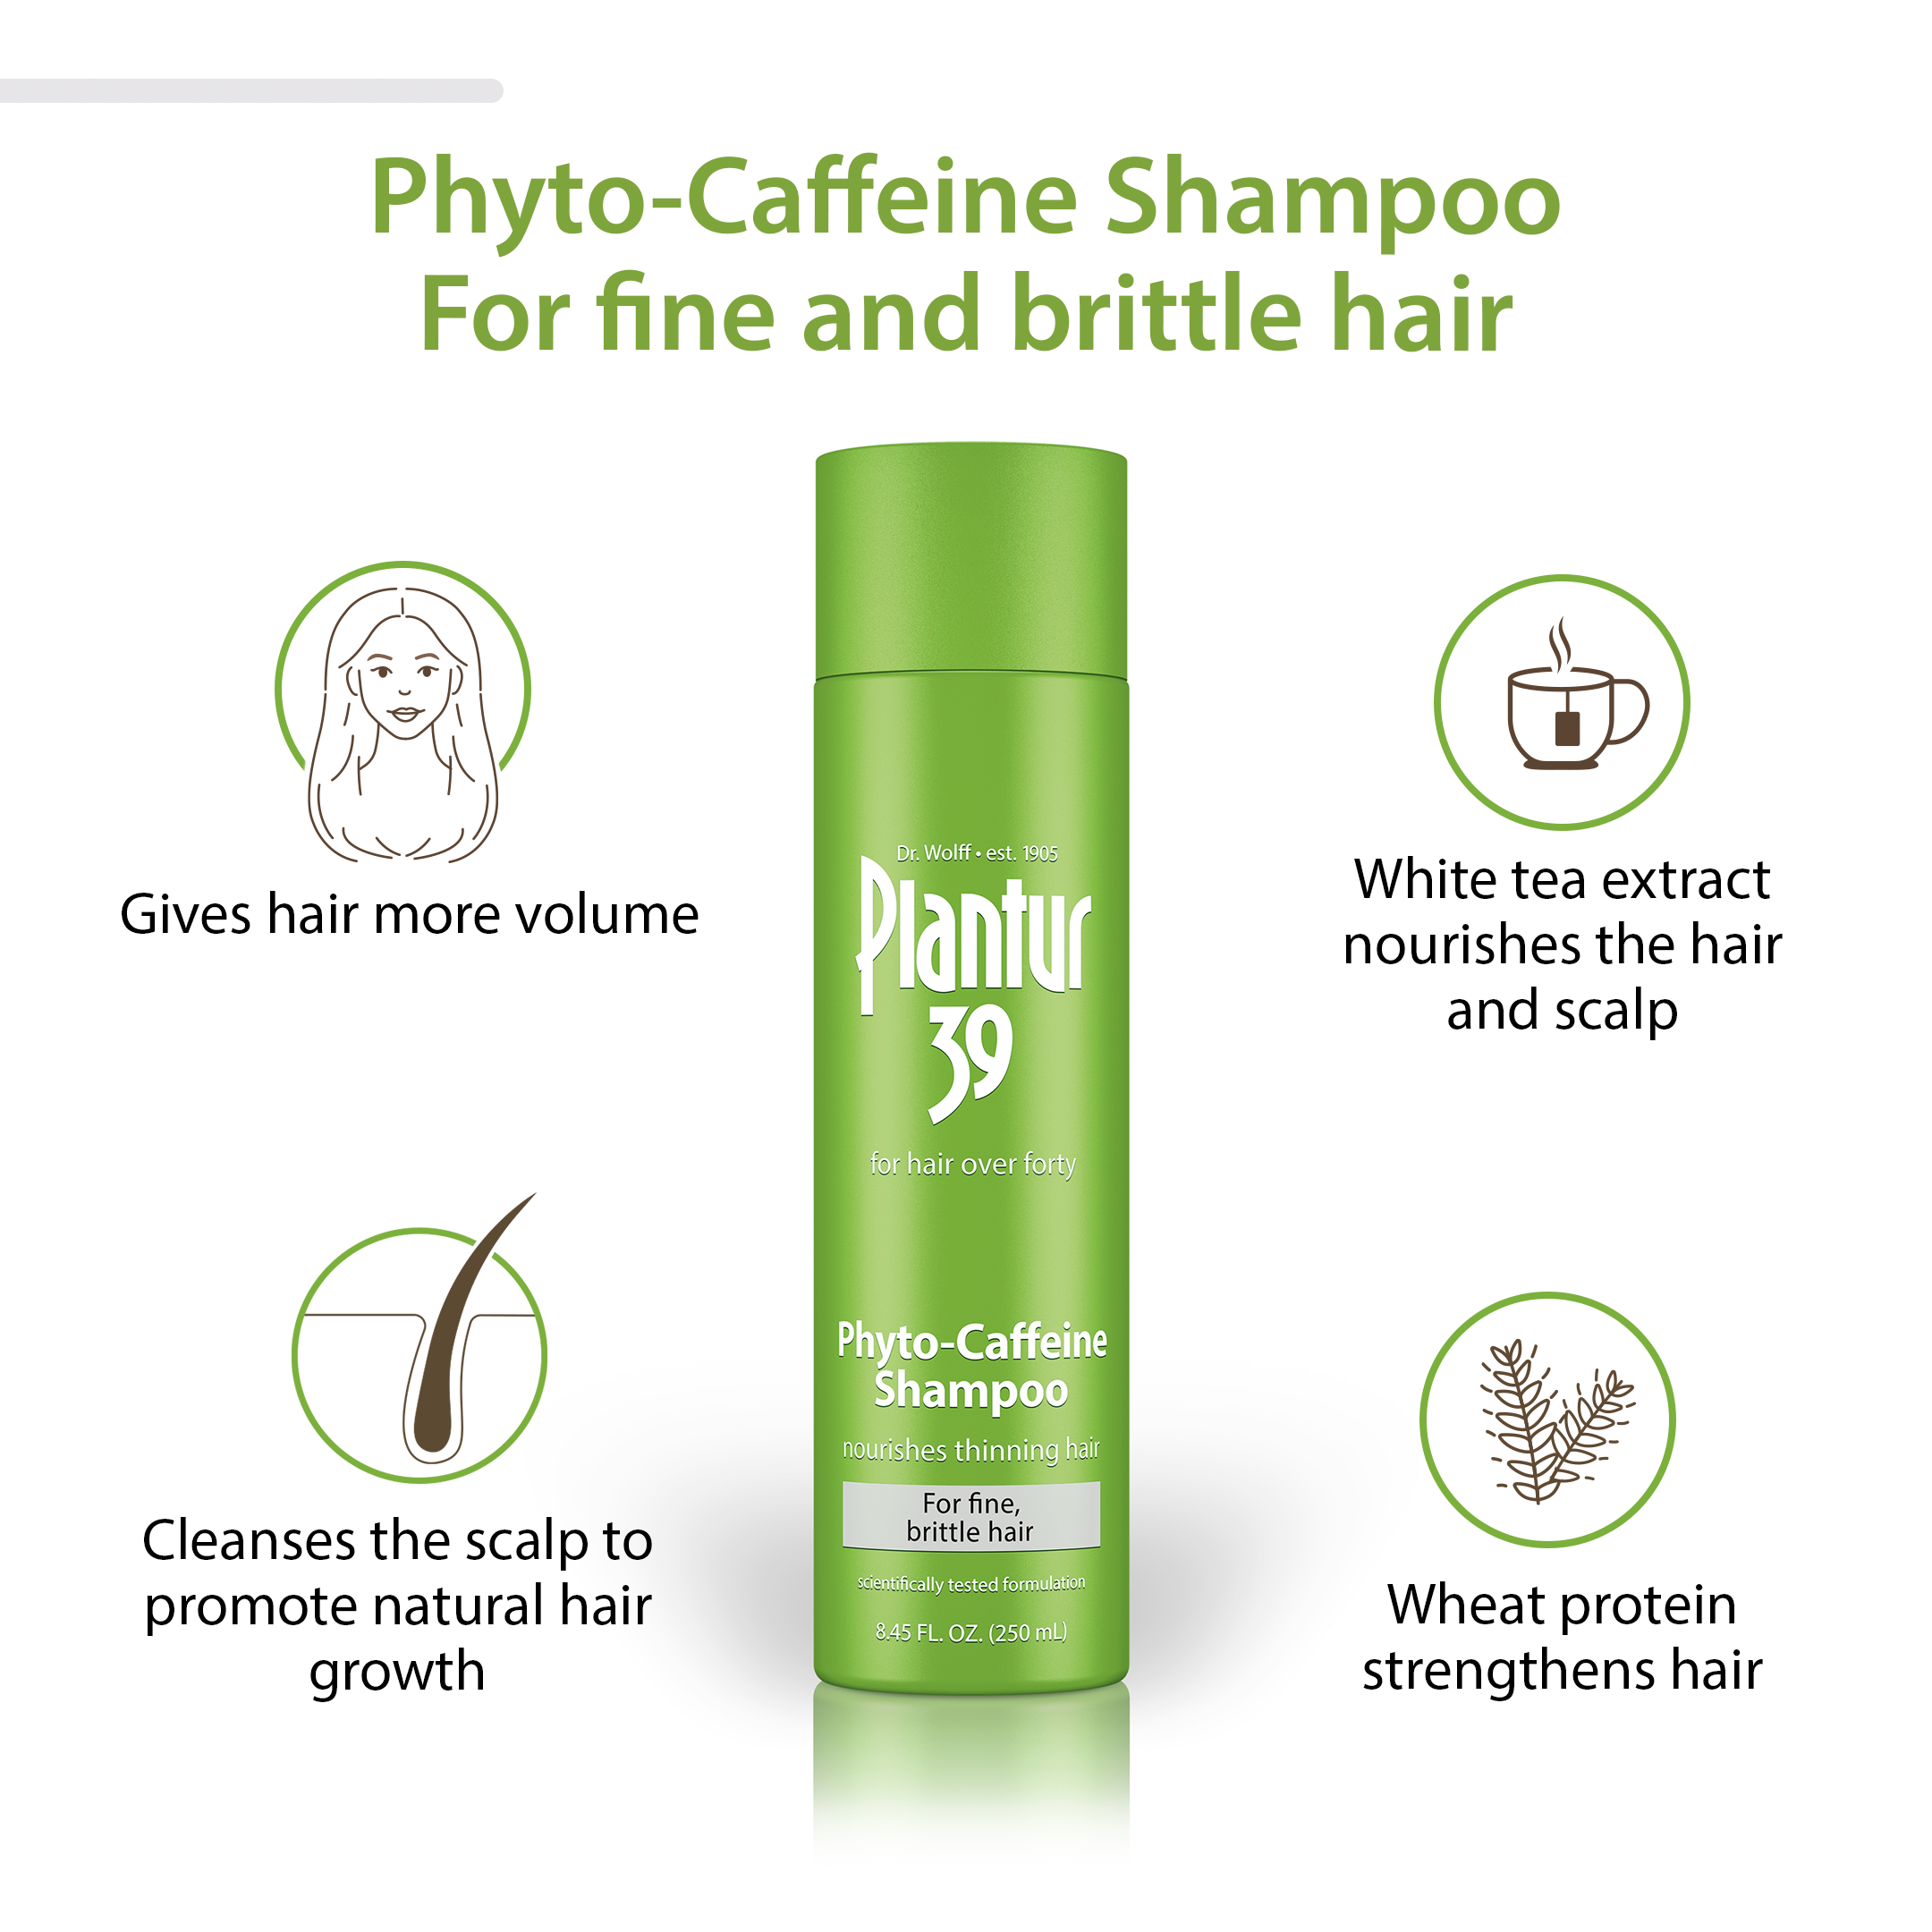 Plantur 39 Phyto-Caffeine Shampoo for Fine, Brittle Hair